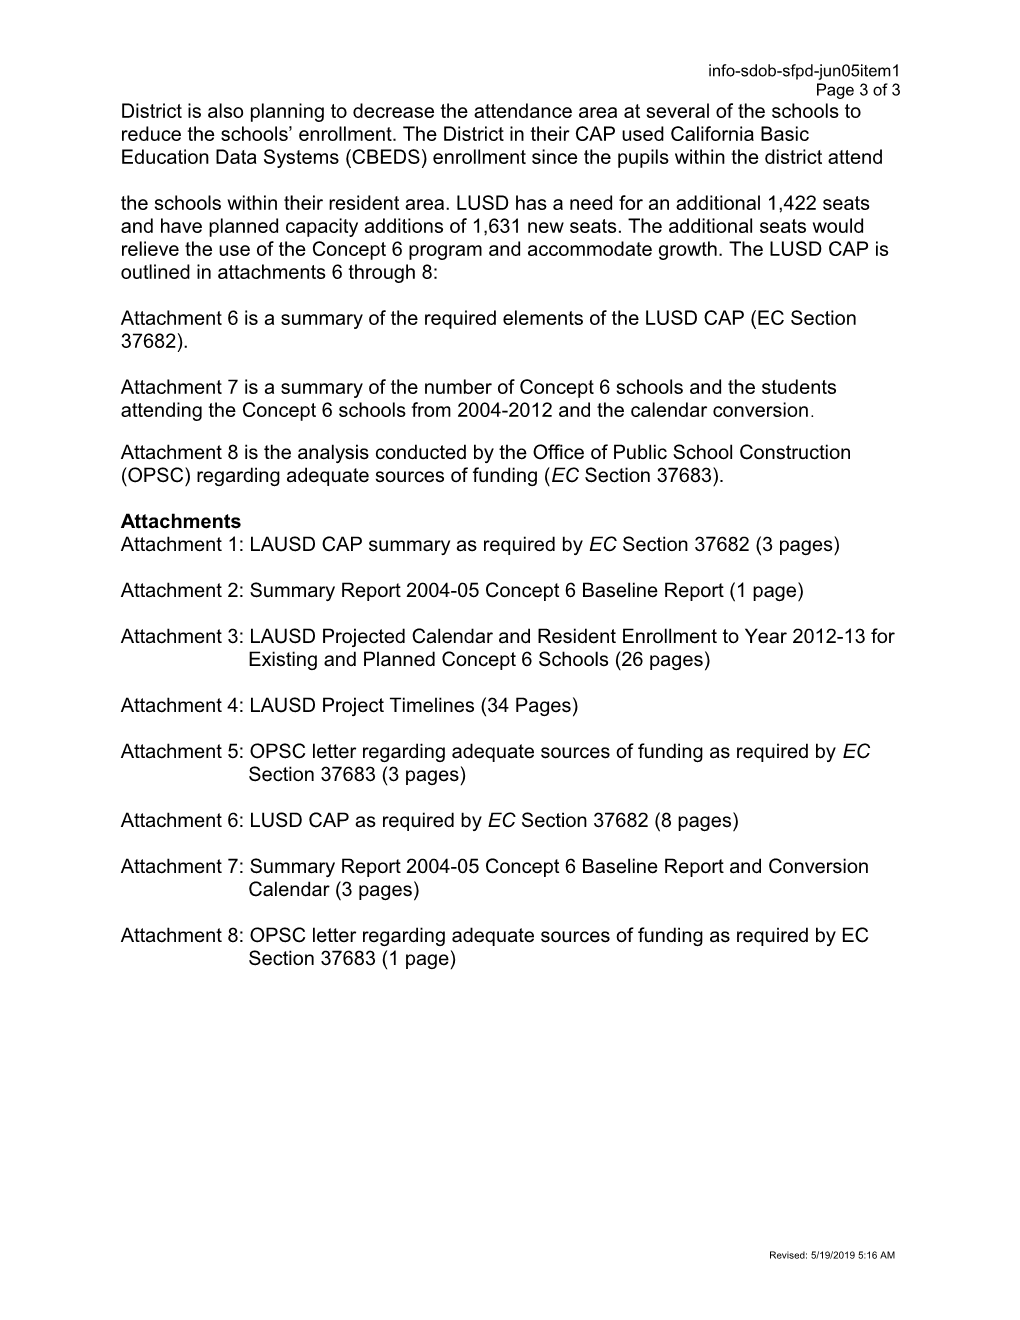 June 2005 SDOB-SFPD Item 01 - Information Memorandum (CA State Board of Education)